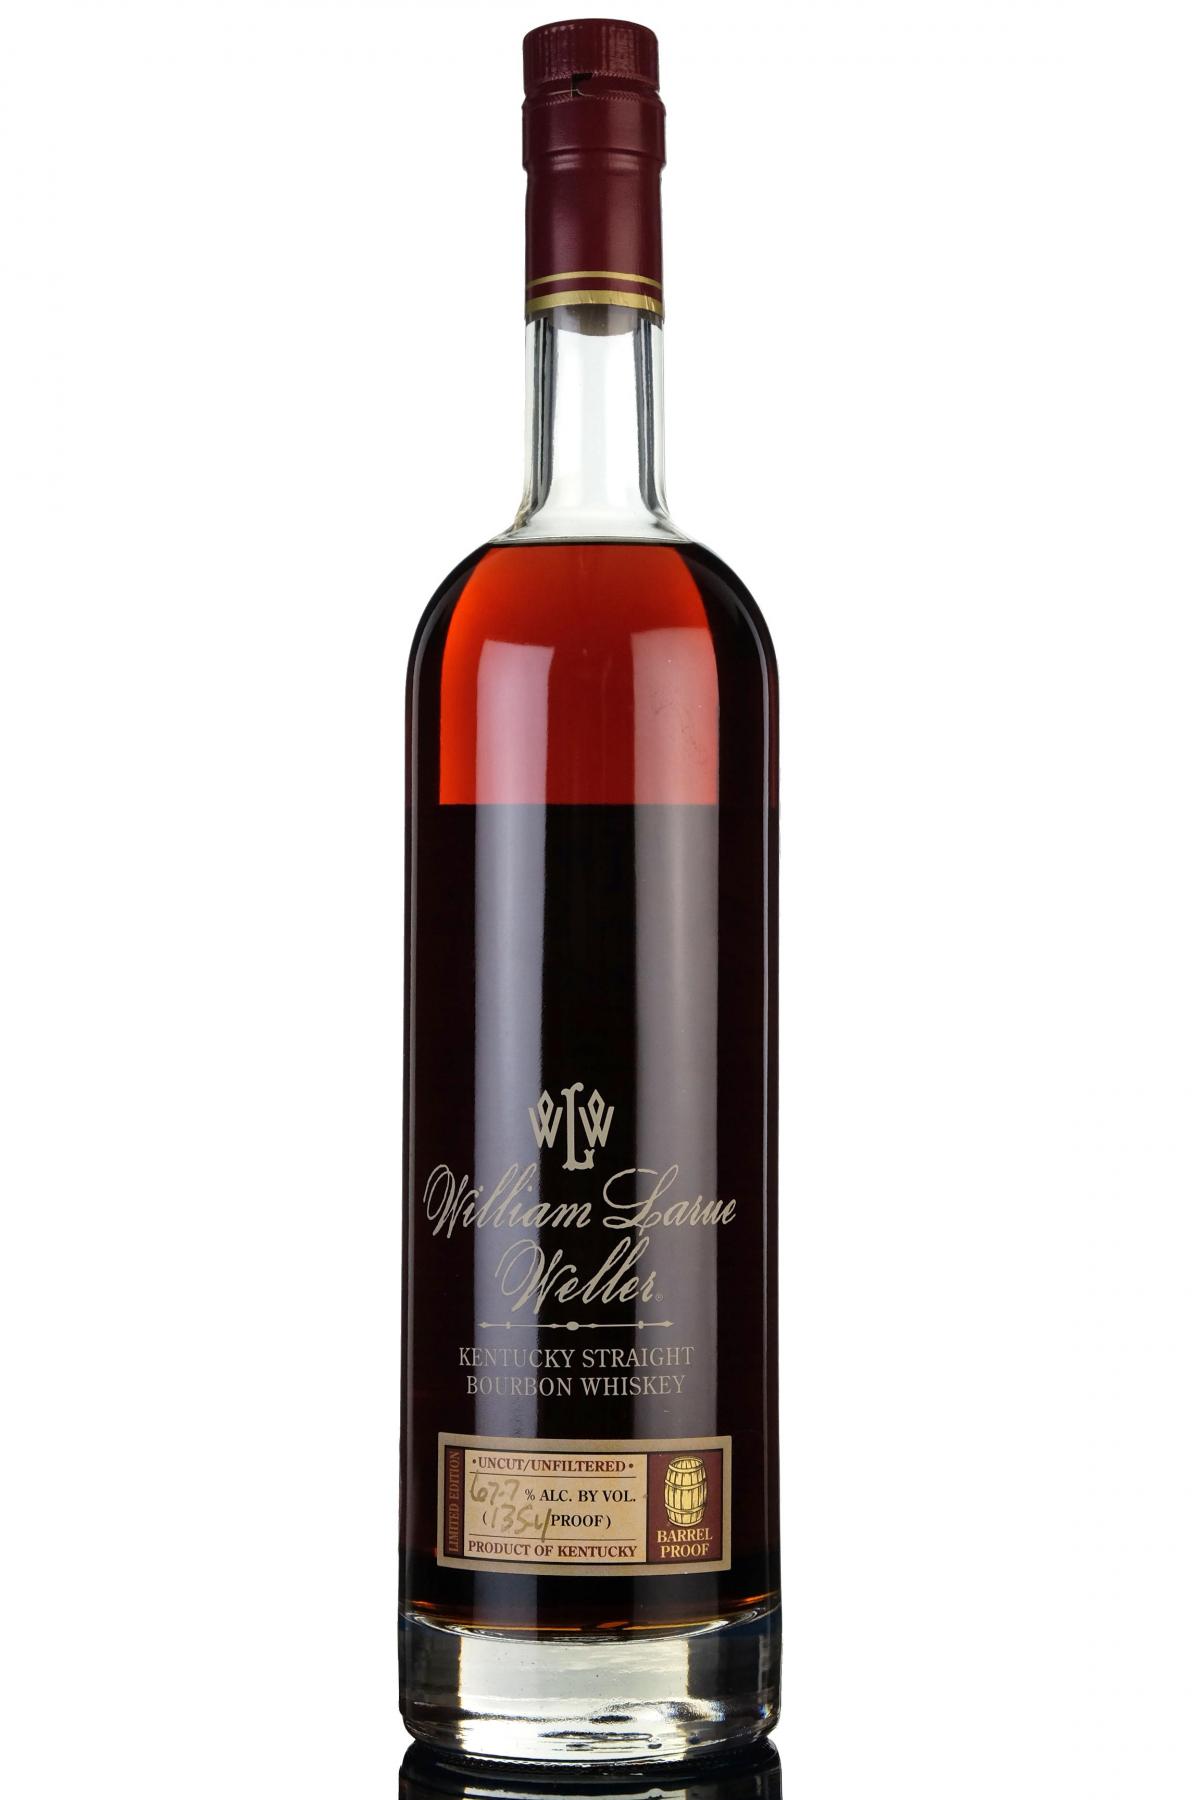 William Larue Weller - 2016 Release - Kentucky Straight Bourbon Whiskey